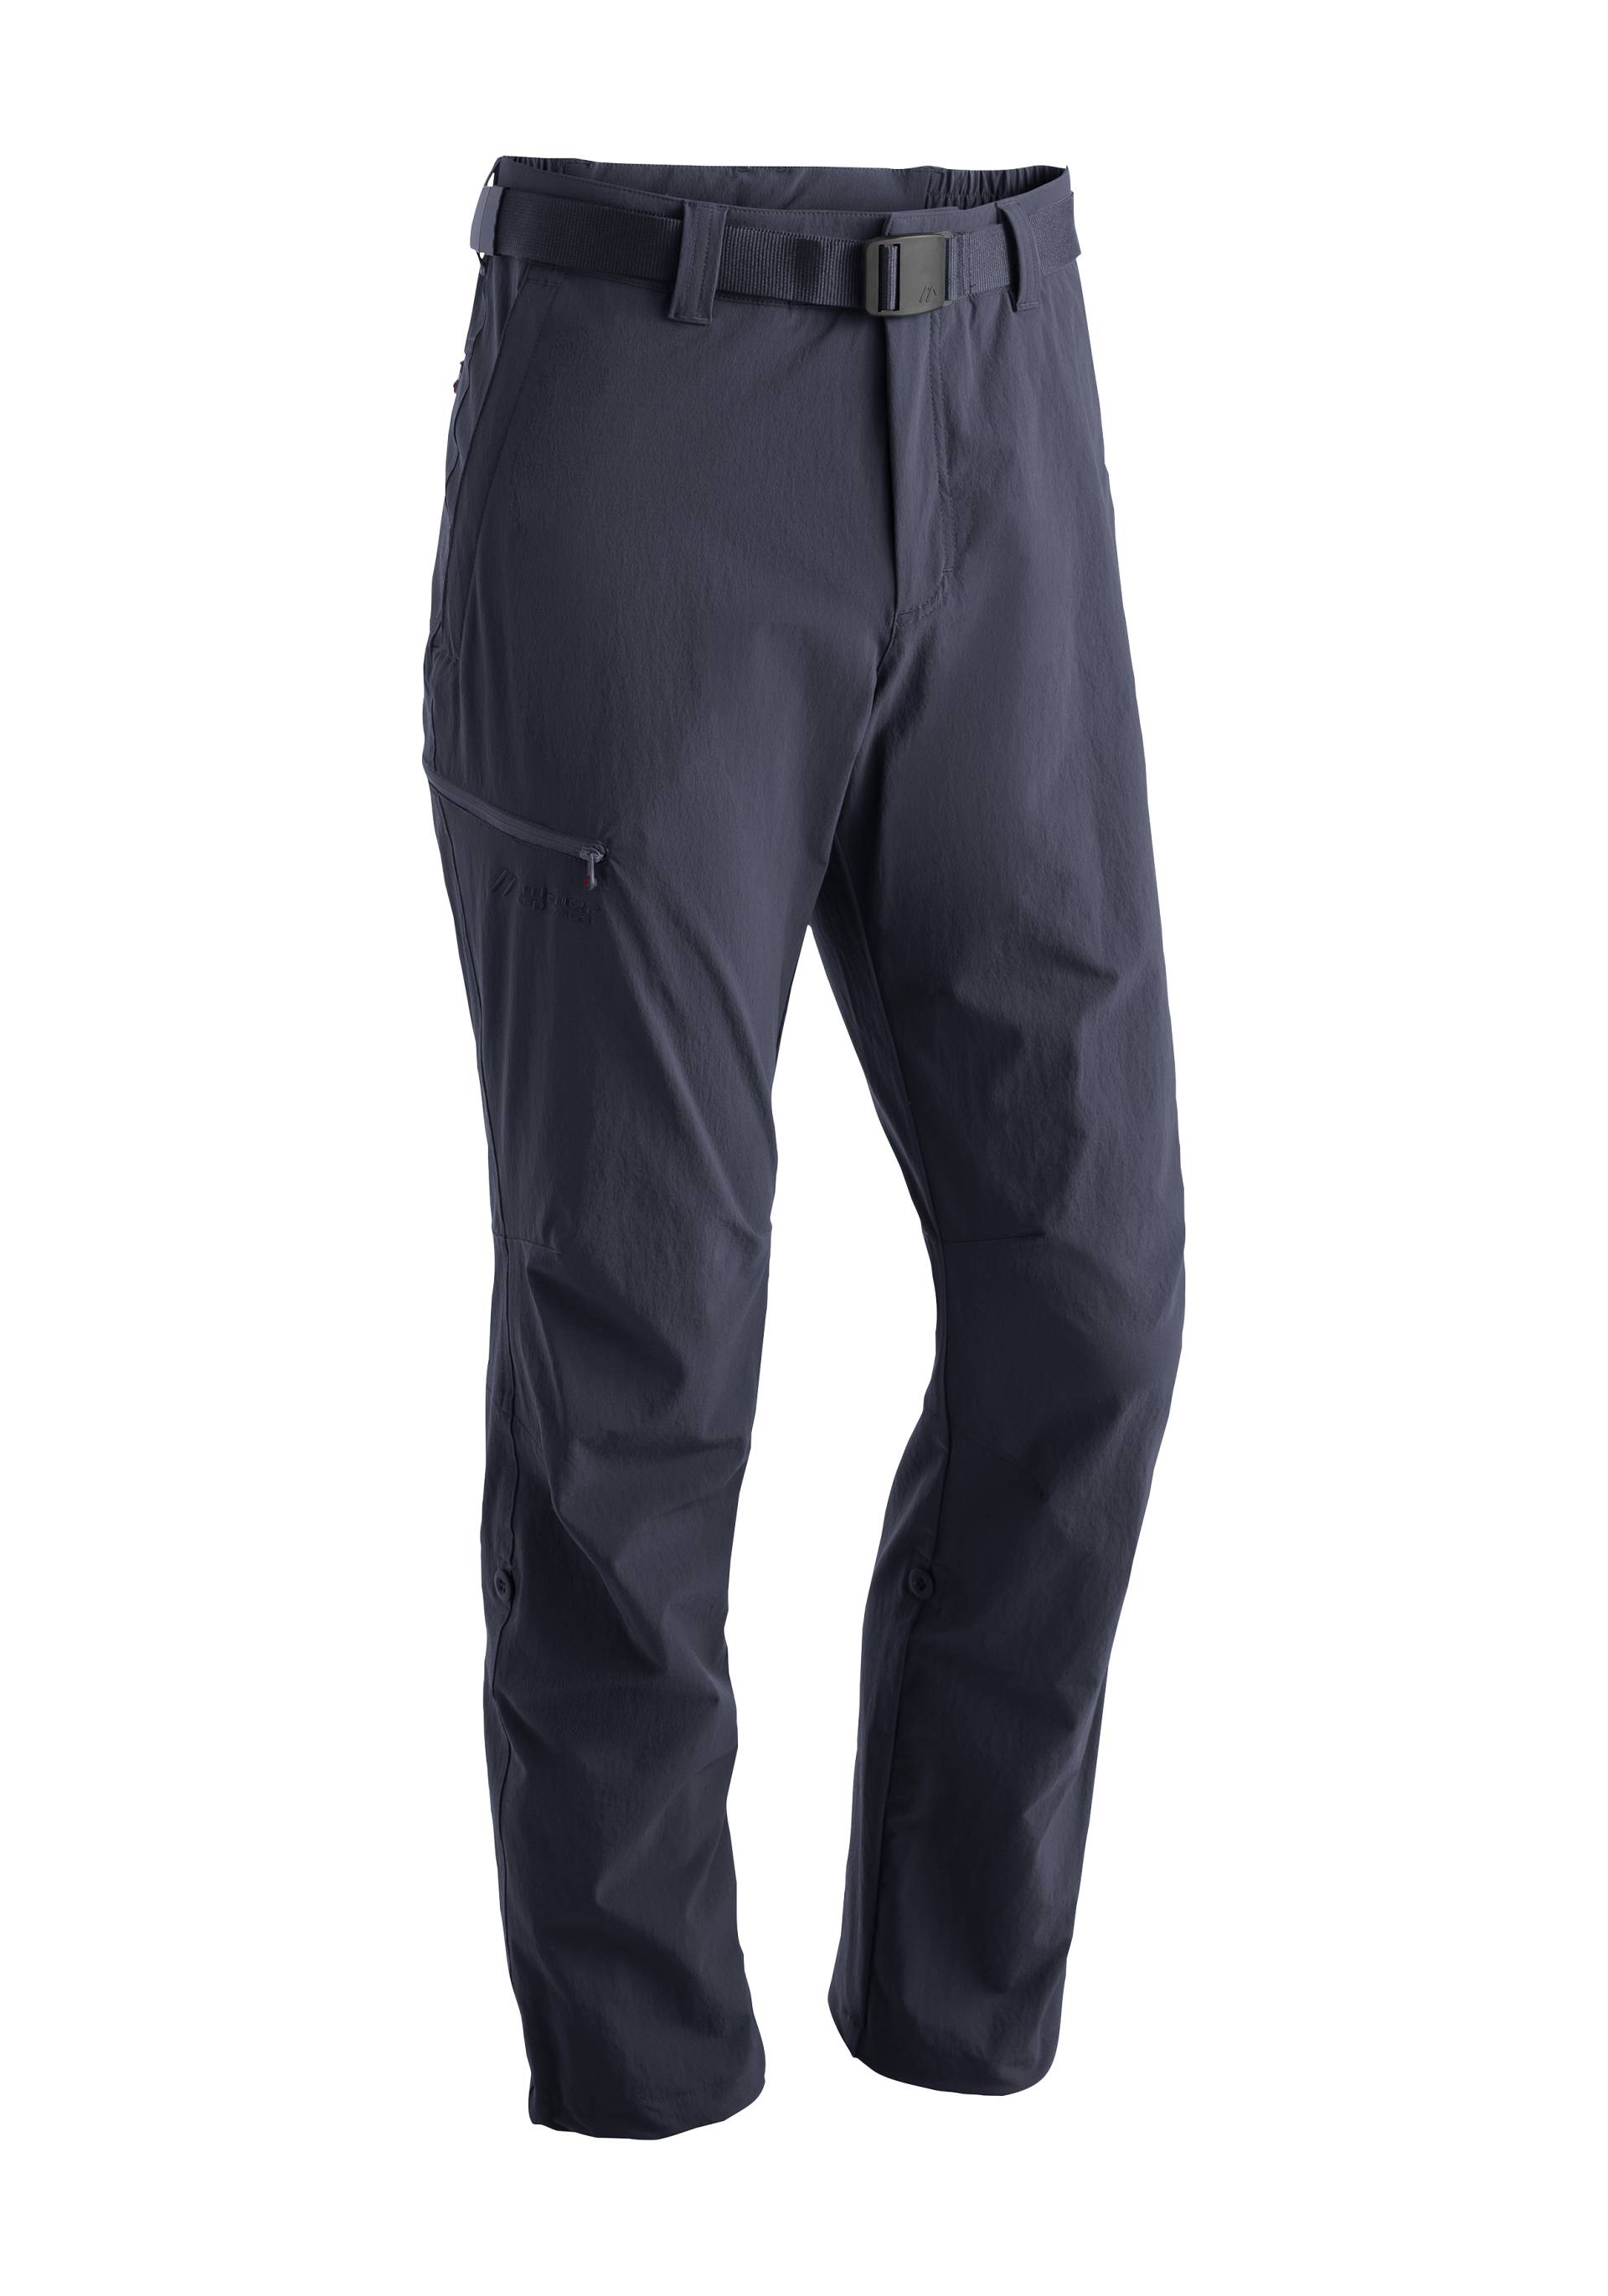 Maier Sports Funktionshose »Nil«, Herren Wanderhose, atmungsaktive Outdoor-Hose mit Roll up Funktion von Maier Sports